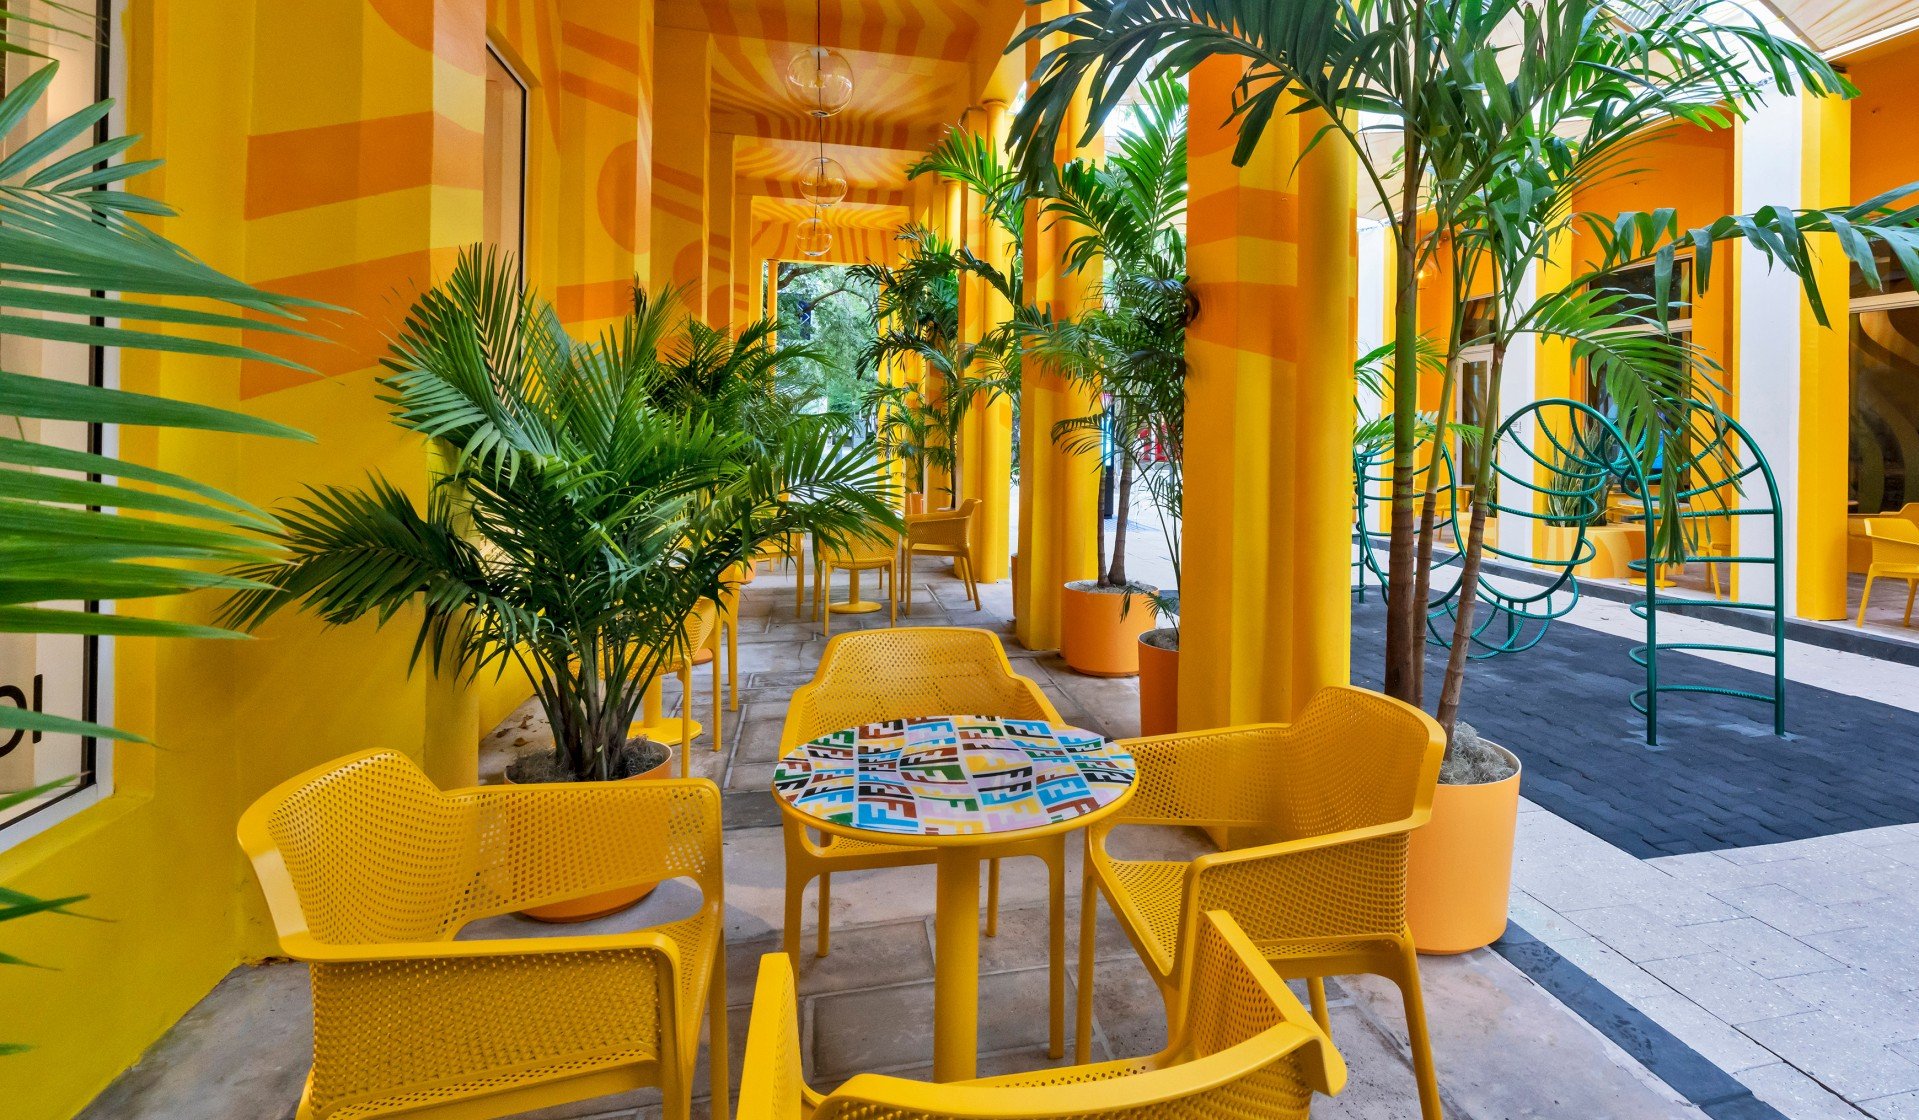 FENDI Caffe at Miami Design District 2021 pop up 2021